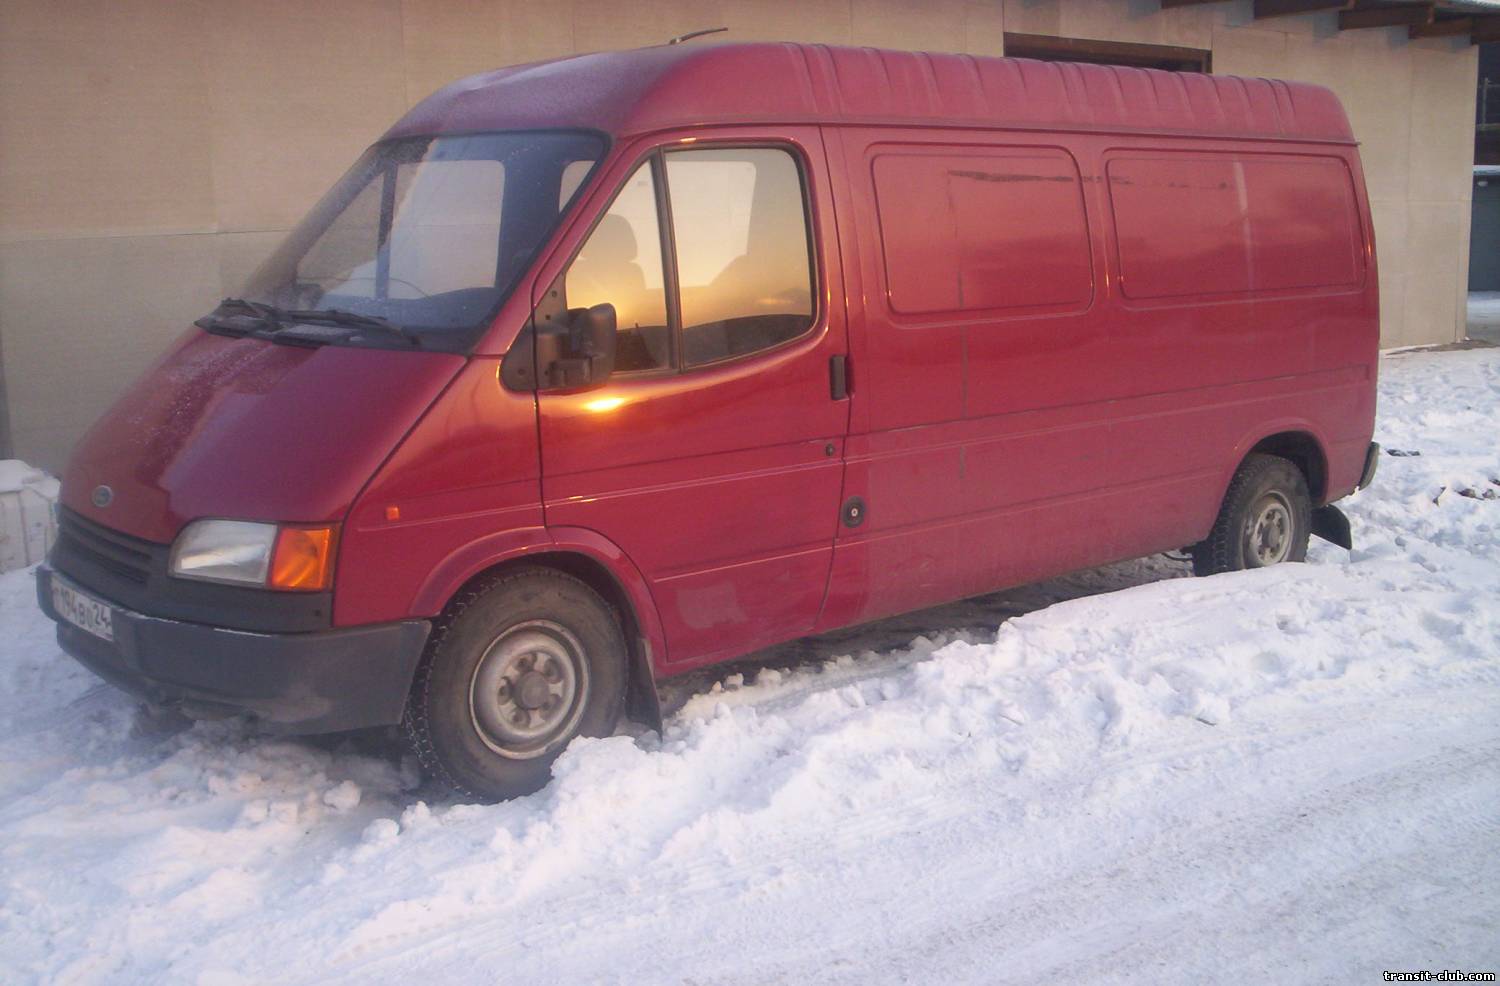 Ford Transit, 1992 купить в Санкт-Петербурге на Avito ...